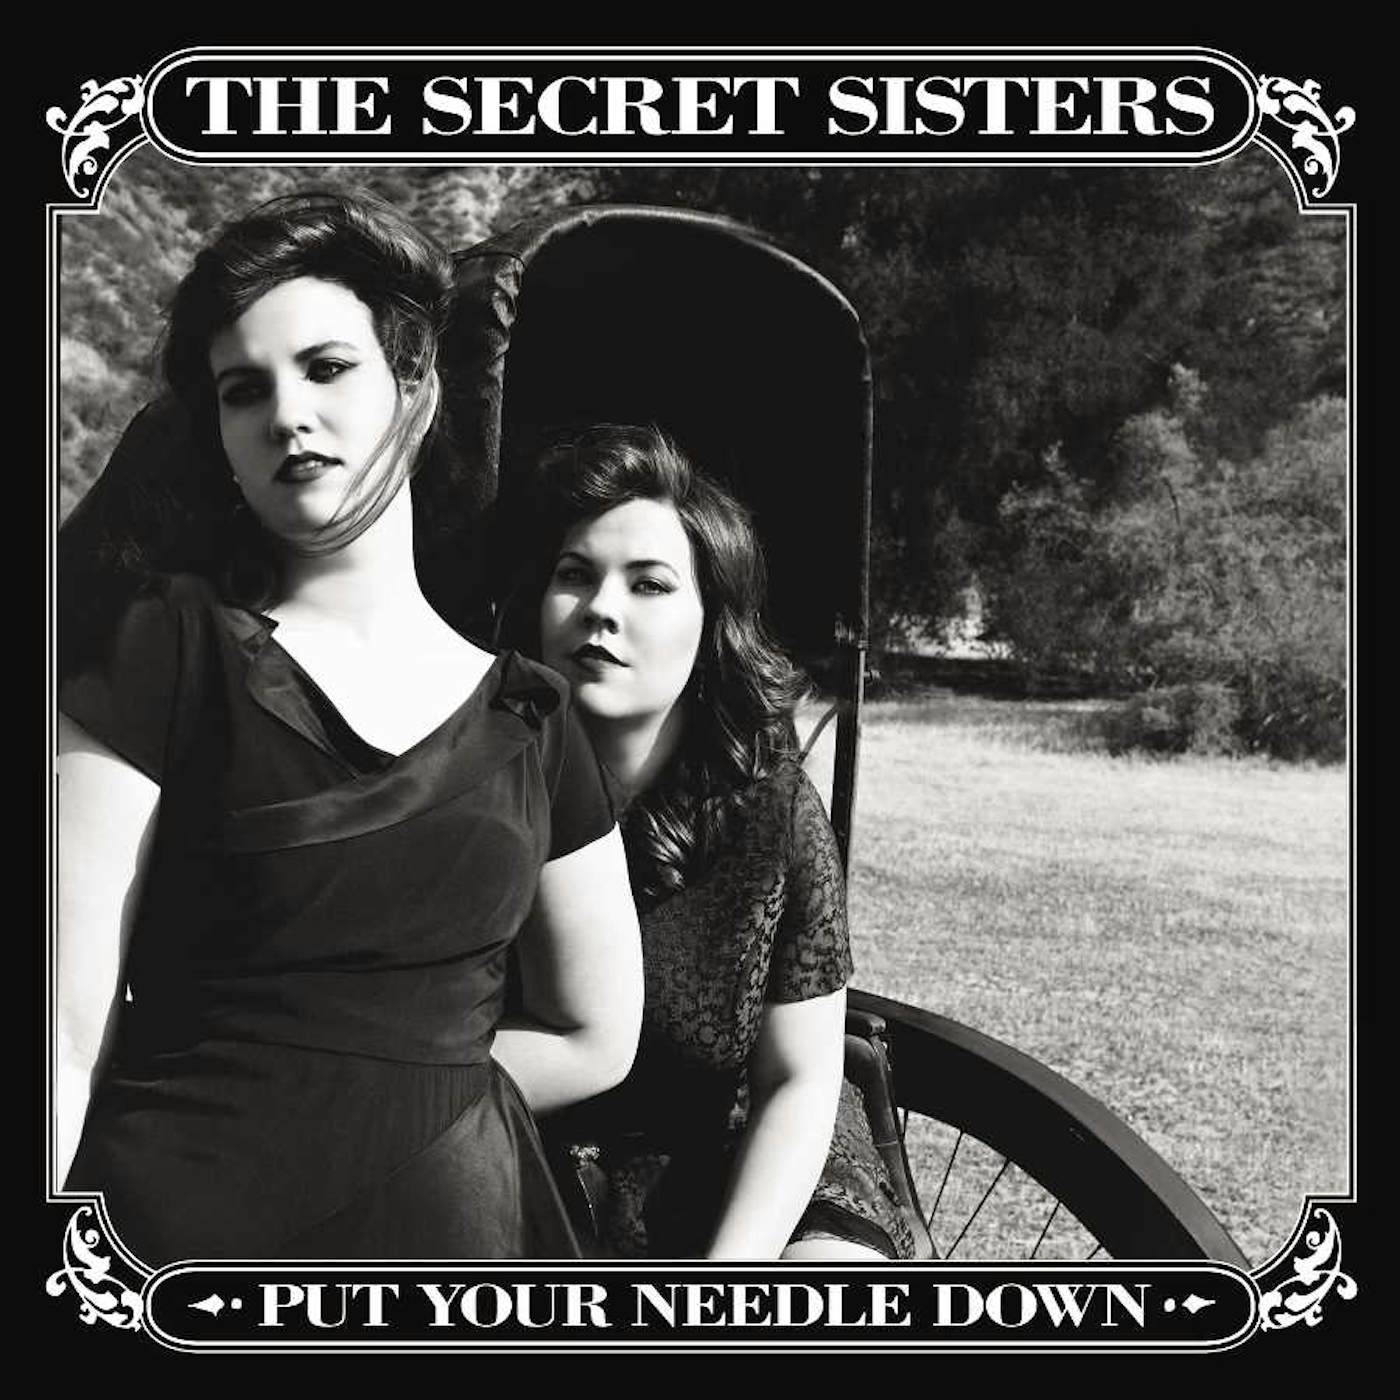 The Secret Sisters Put Your Needle Down Vinyl Record